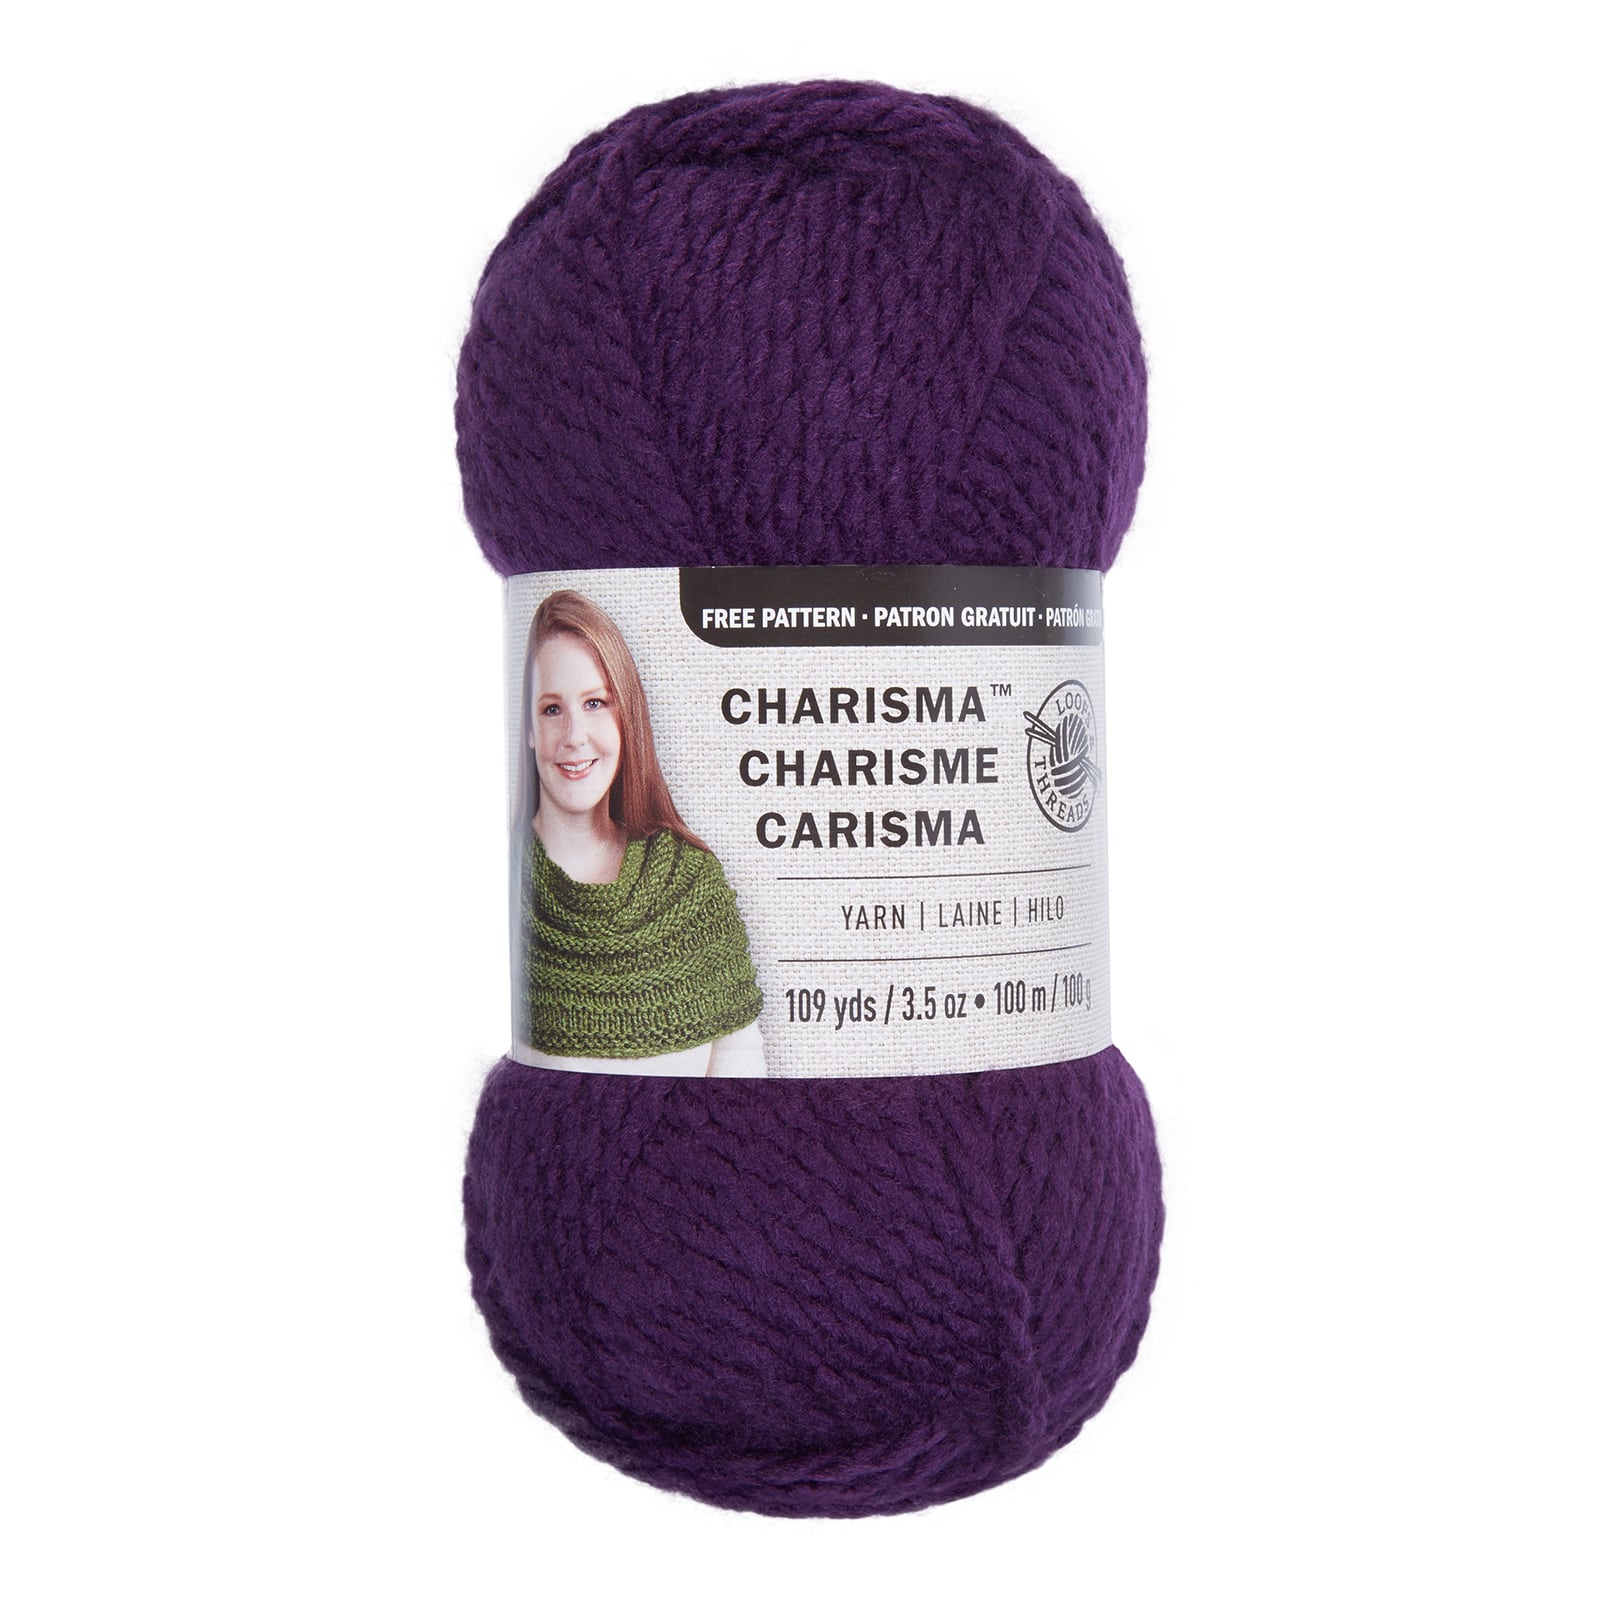  Loops & Threads Charisma Yarn, 3.5 oz in Northern Light